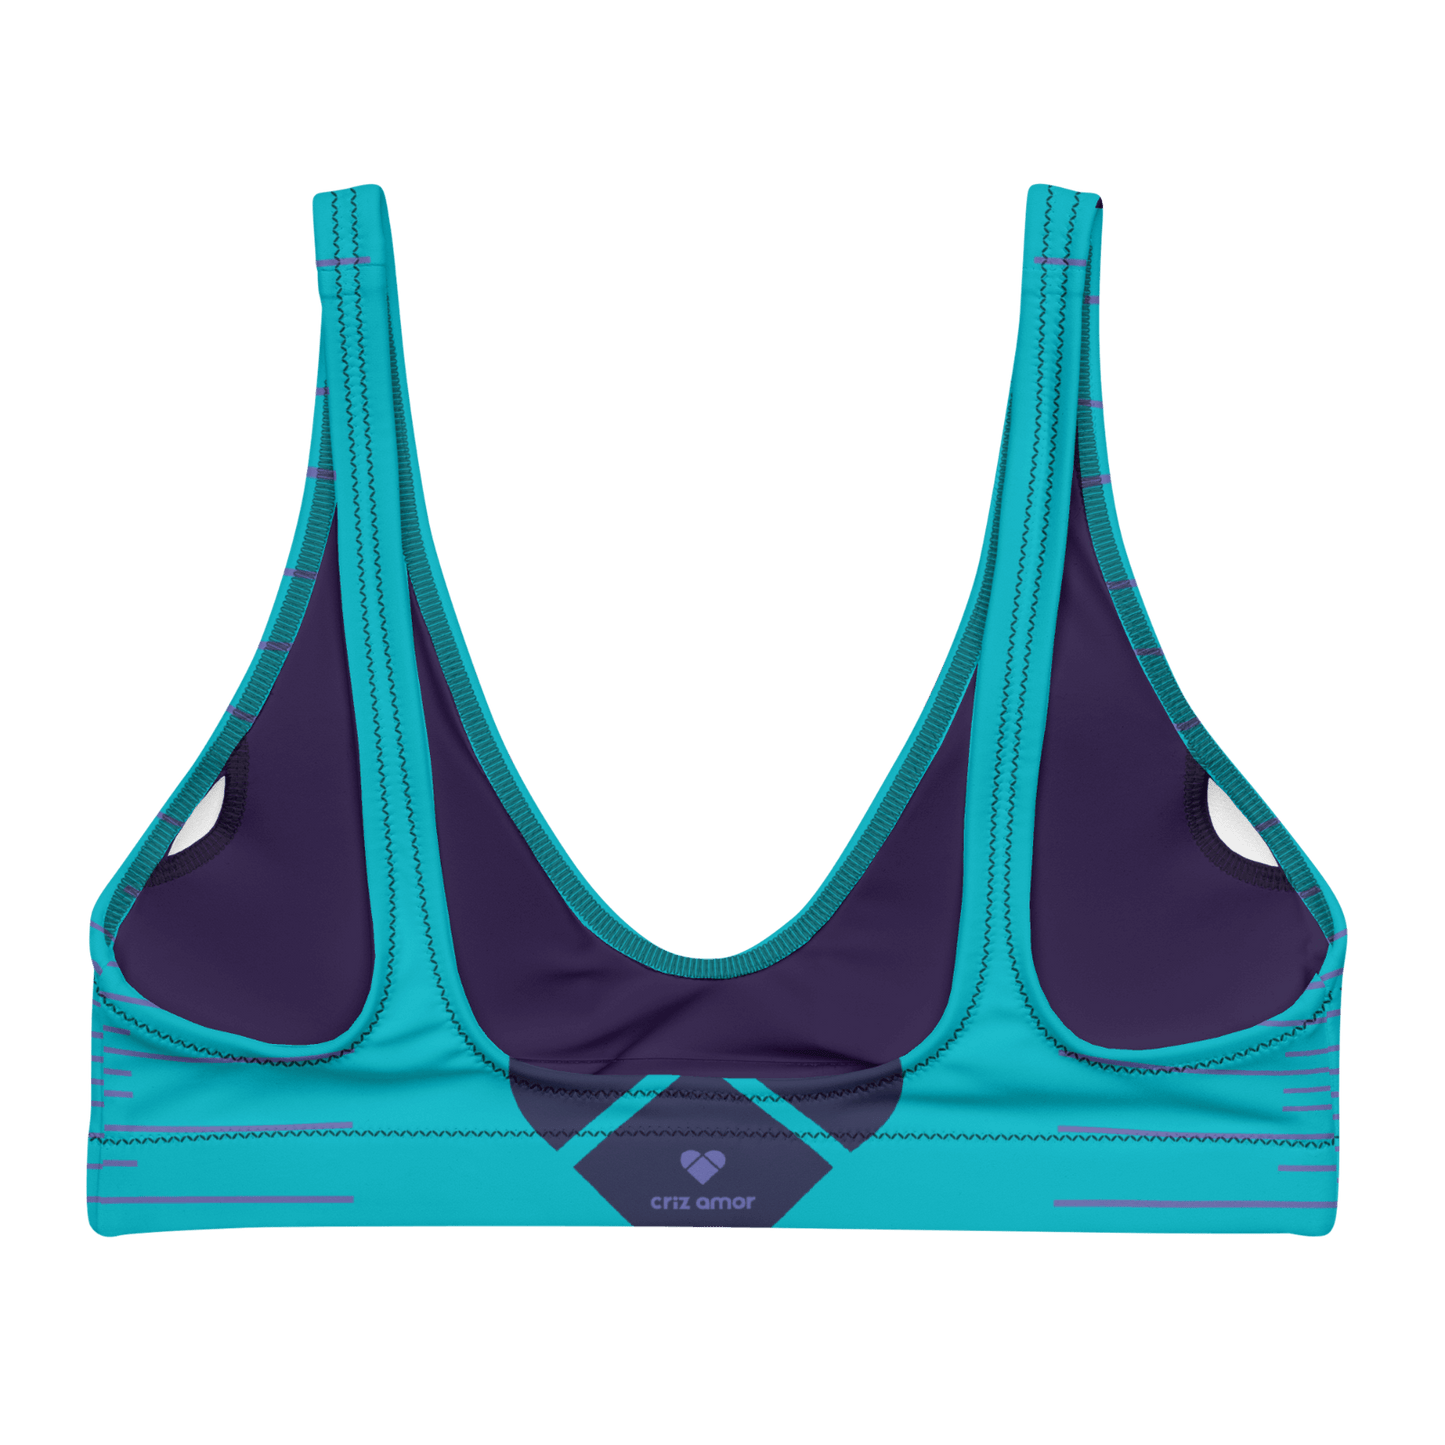 Designer Bikini Top in Turquoise and Periwinkle Stripes